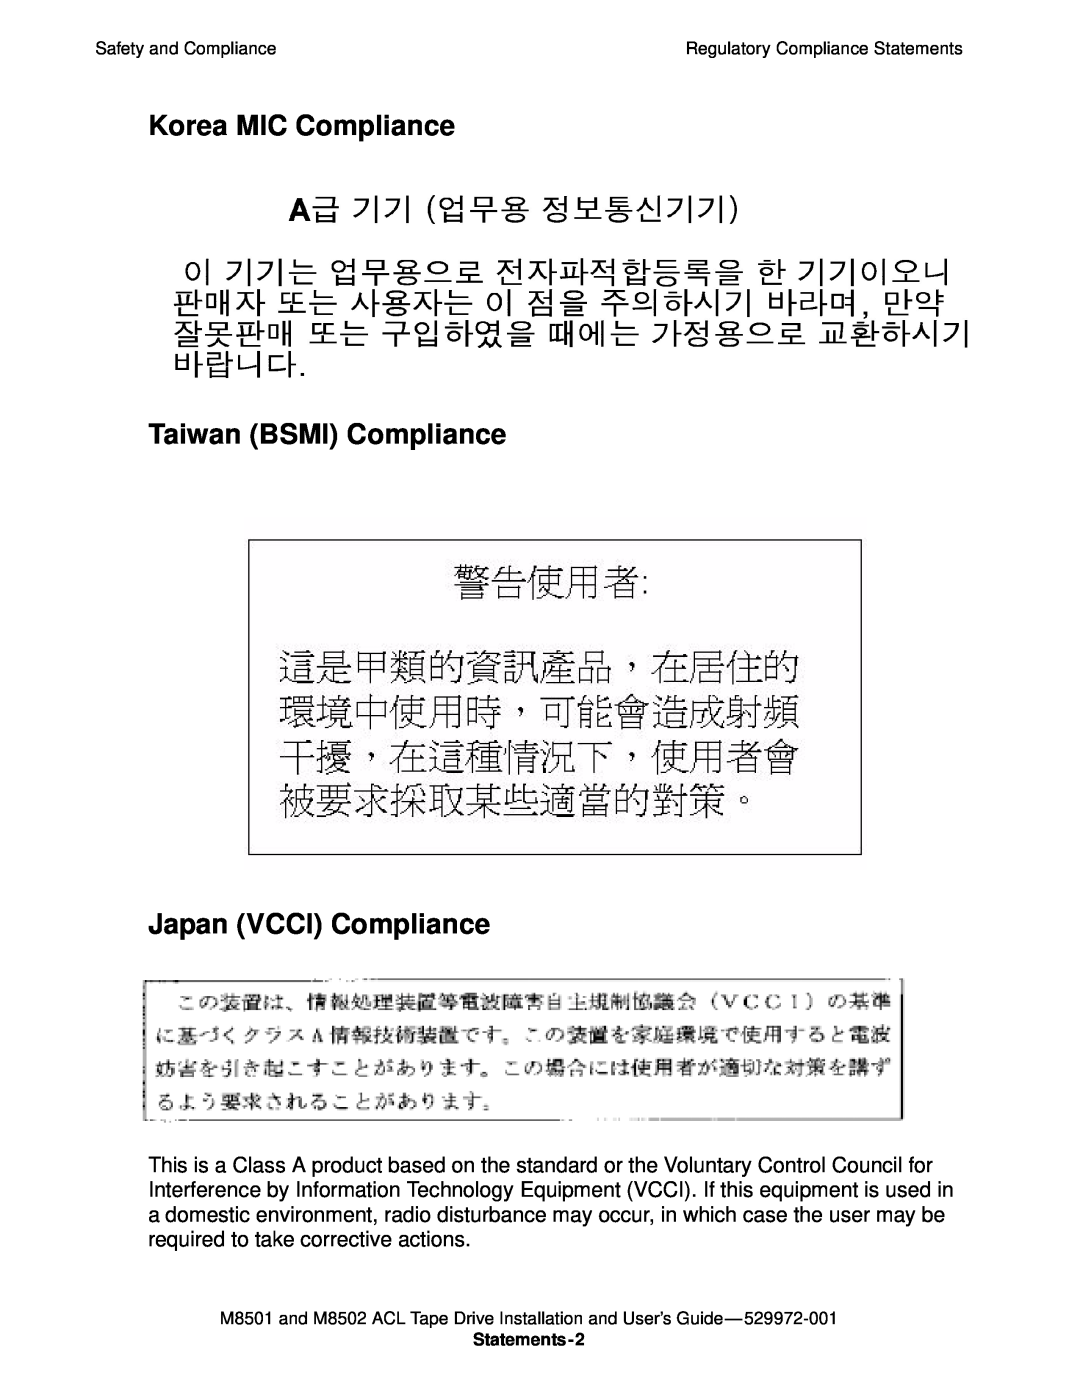 SMC Networks M8501 manual Korea MIC Compliance Taiwan BSMI Compliance Japan VCCI Compliance, Statements-2 